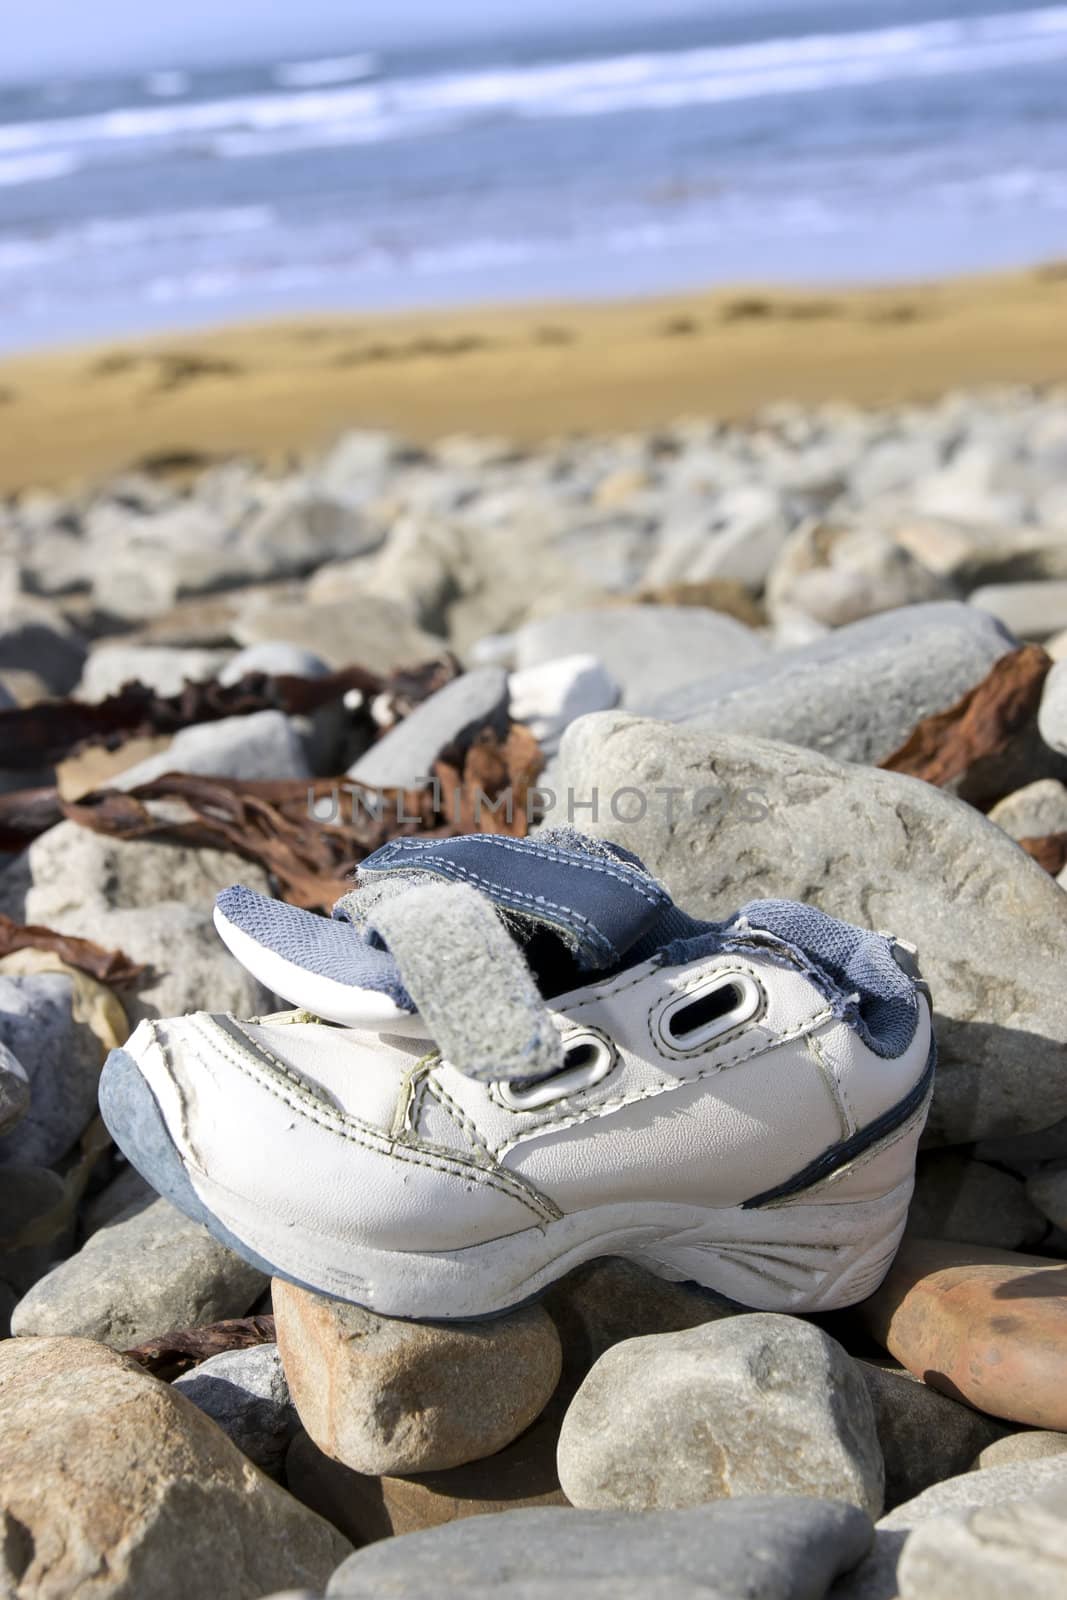 abandoned running shoe on a rocky irish beach by morrbyte